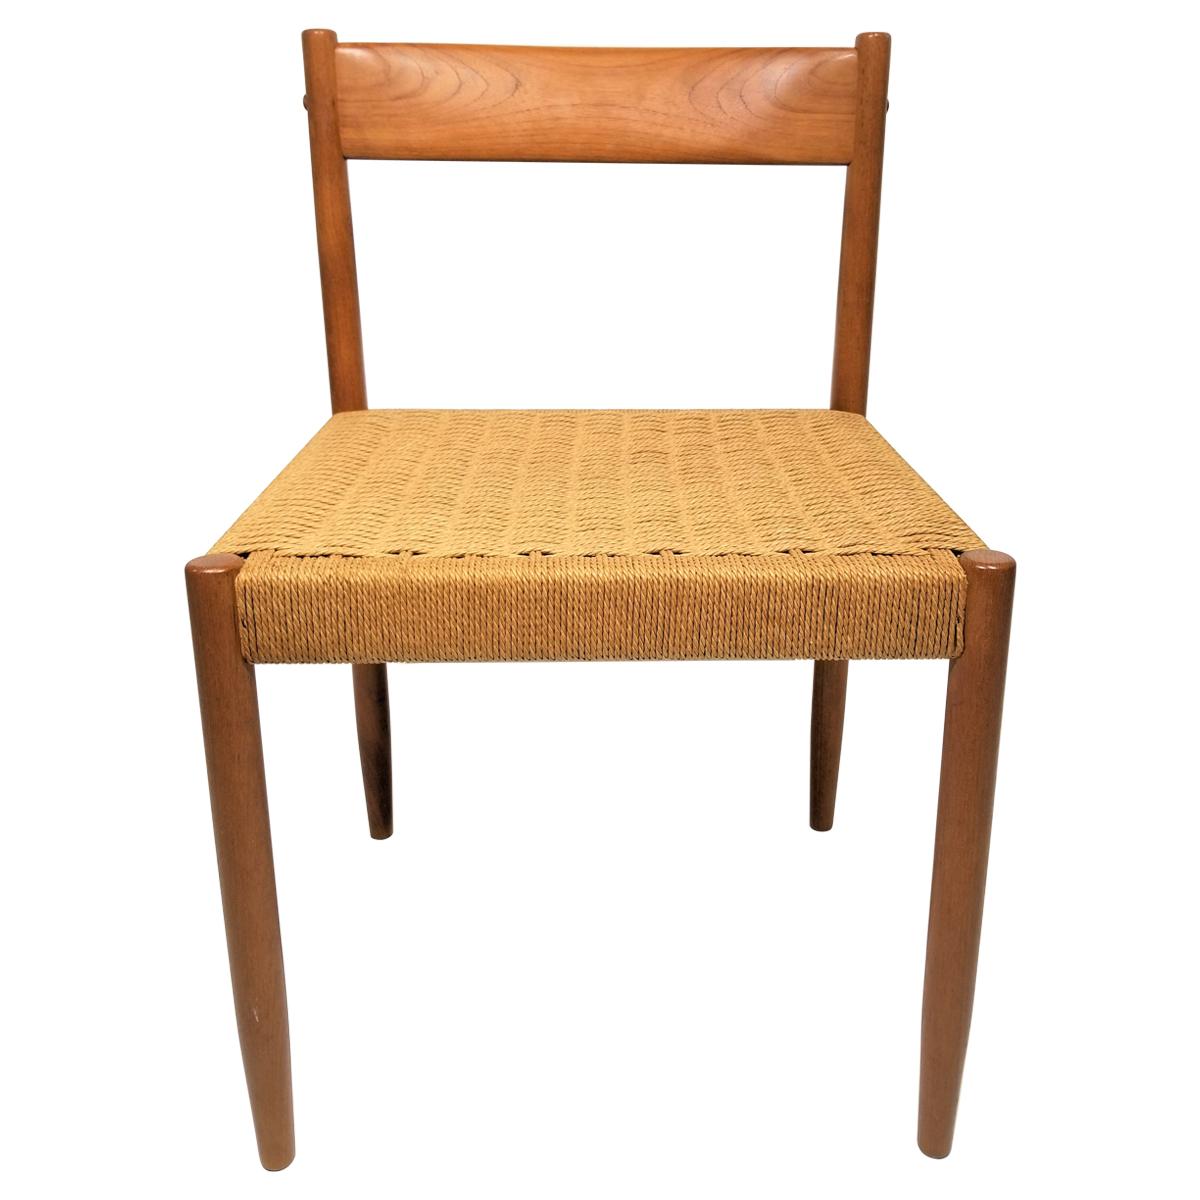 Poul Volther for Frem Rojle Danish Teak Woven Chair Midcentury 1960s  For Sale